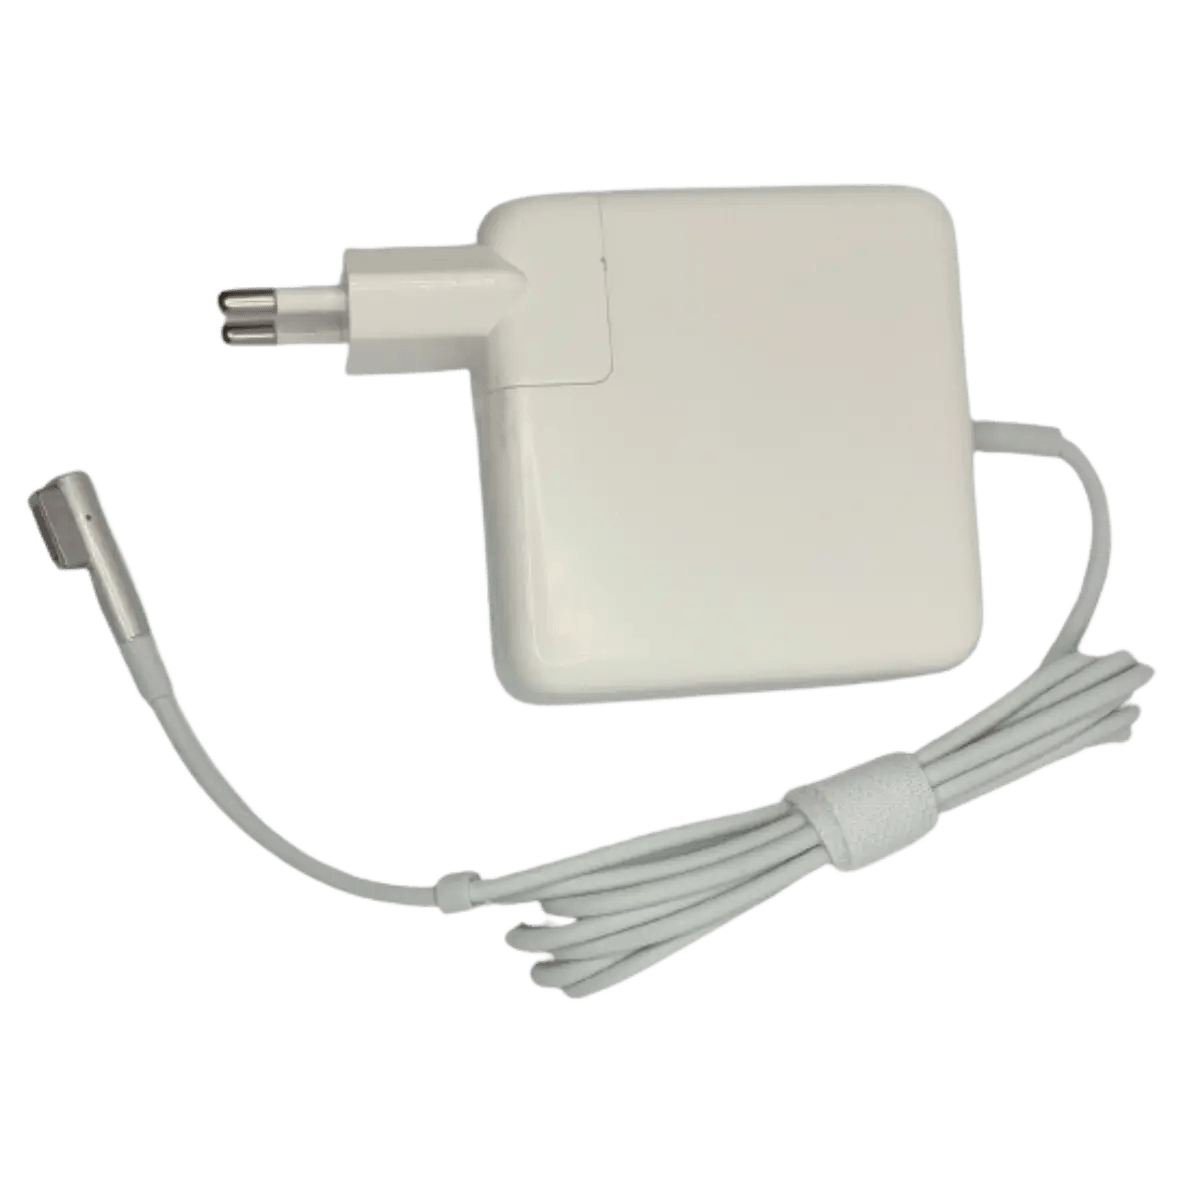 LI-Chargeur Macbook Air-Pro 60W, Chargeur Magsafe 2 Compatible